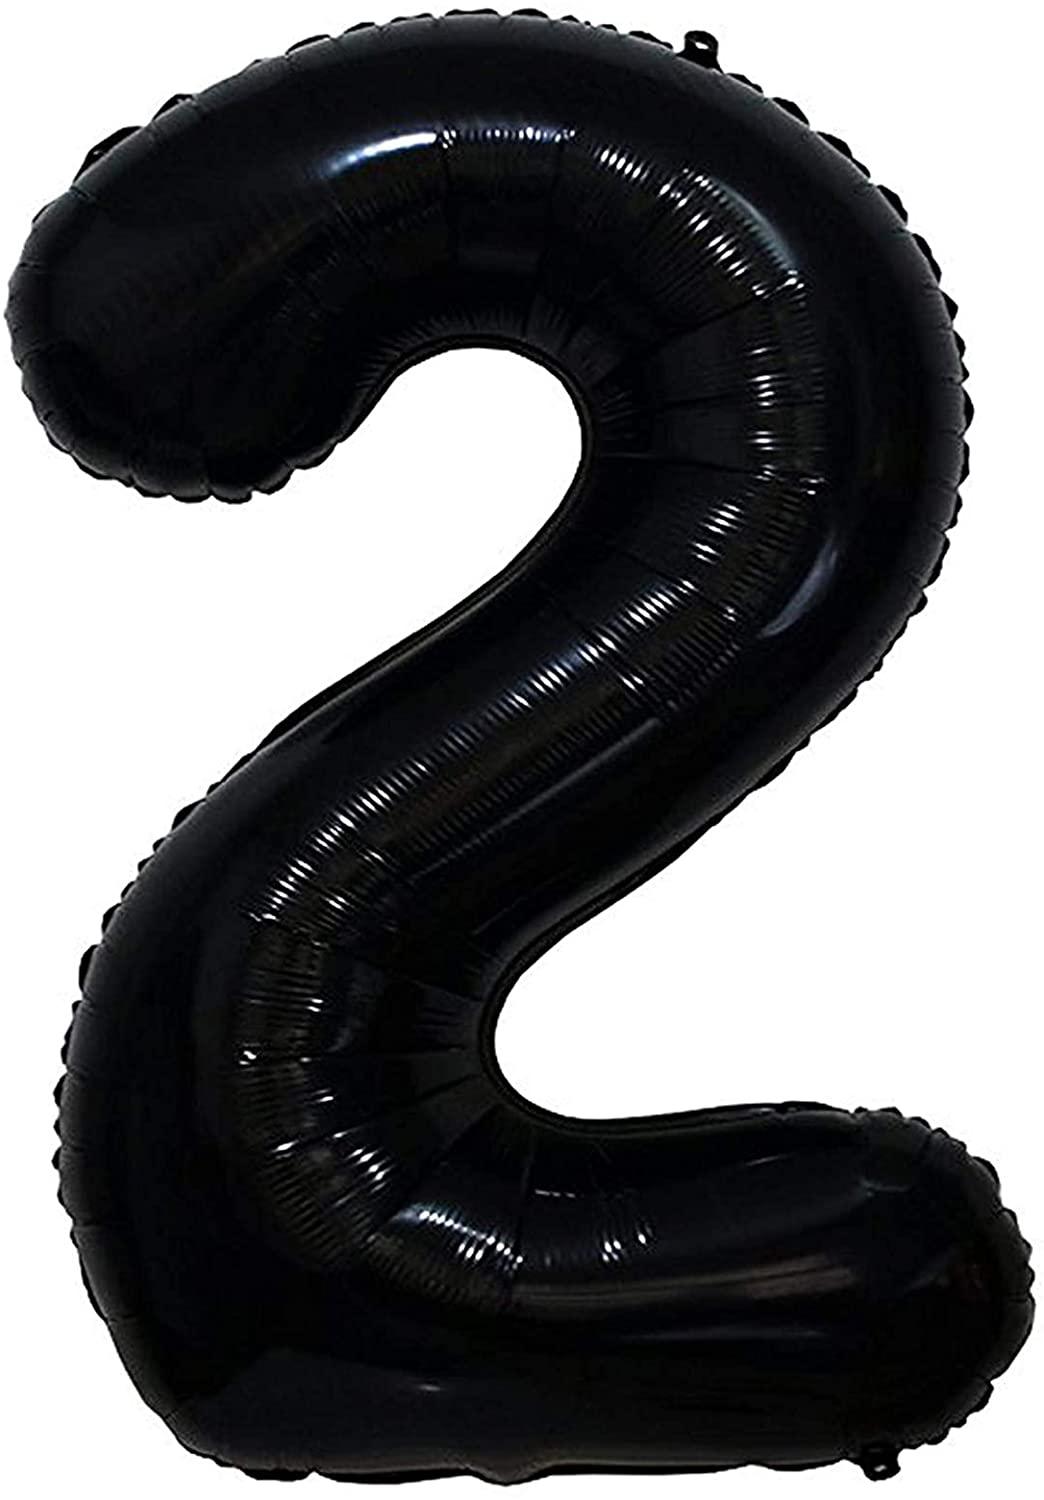 Black Number 1 Balloon, 40 Inch - Lasercutwraps Shop